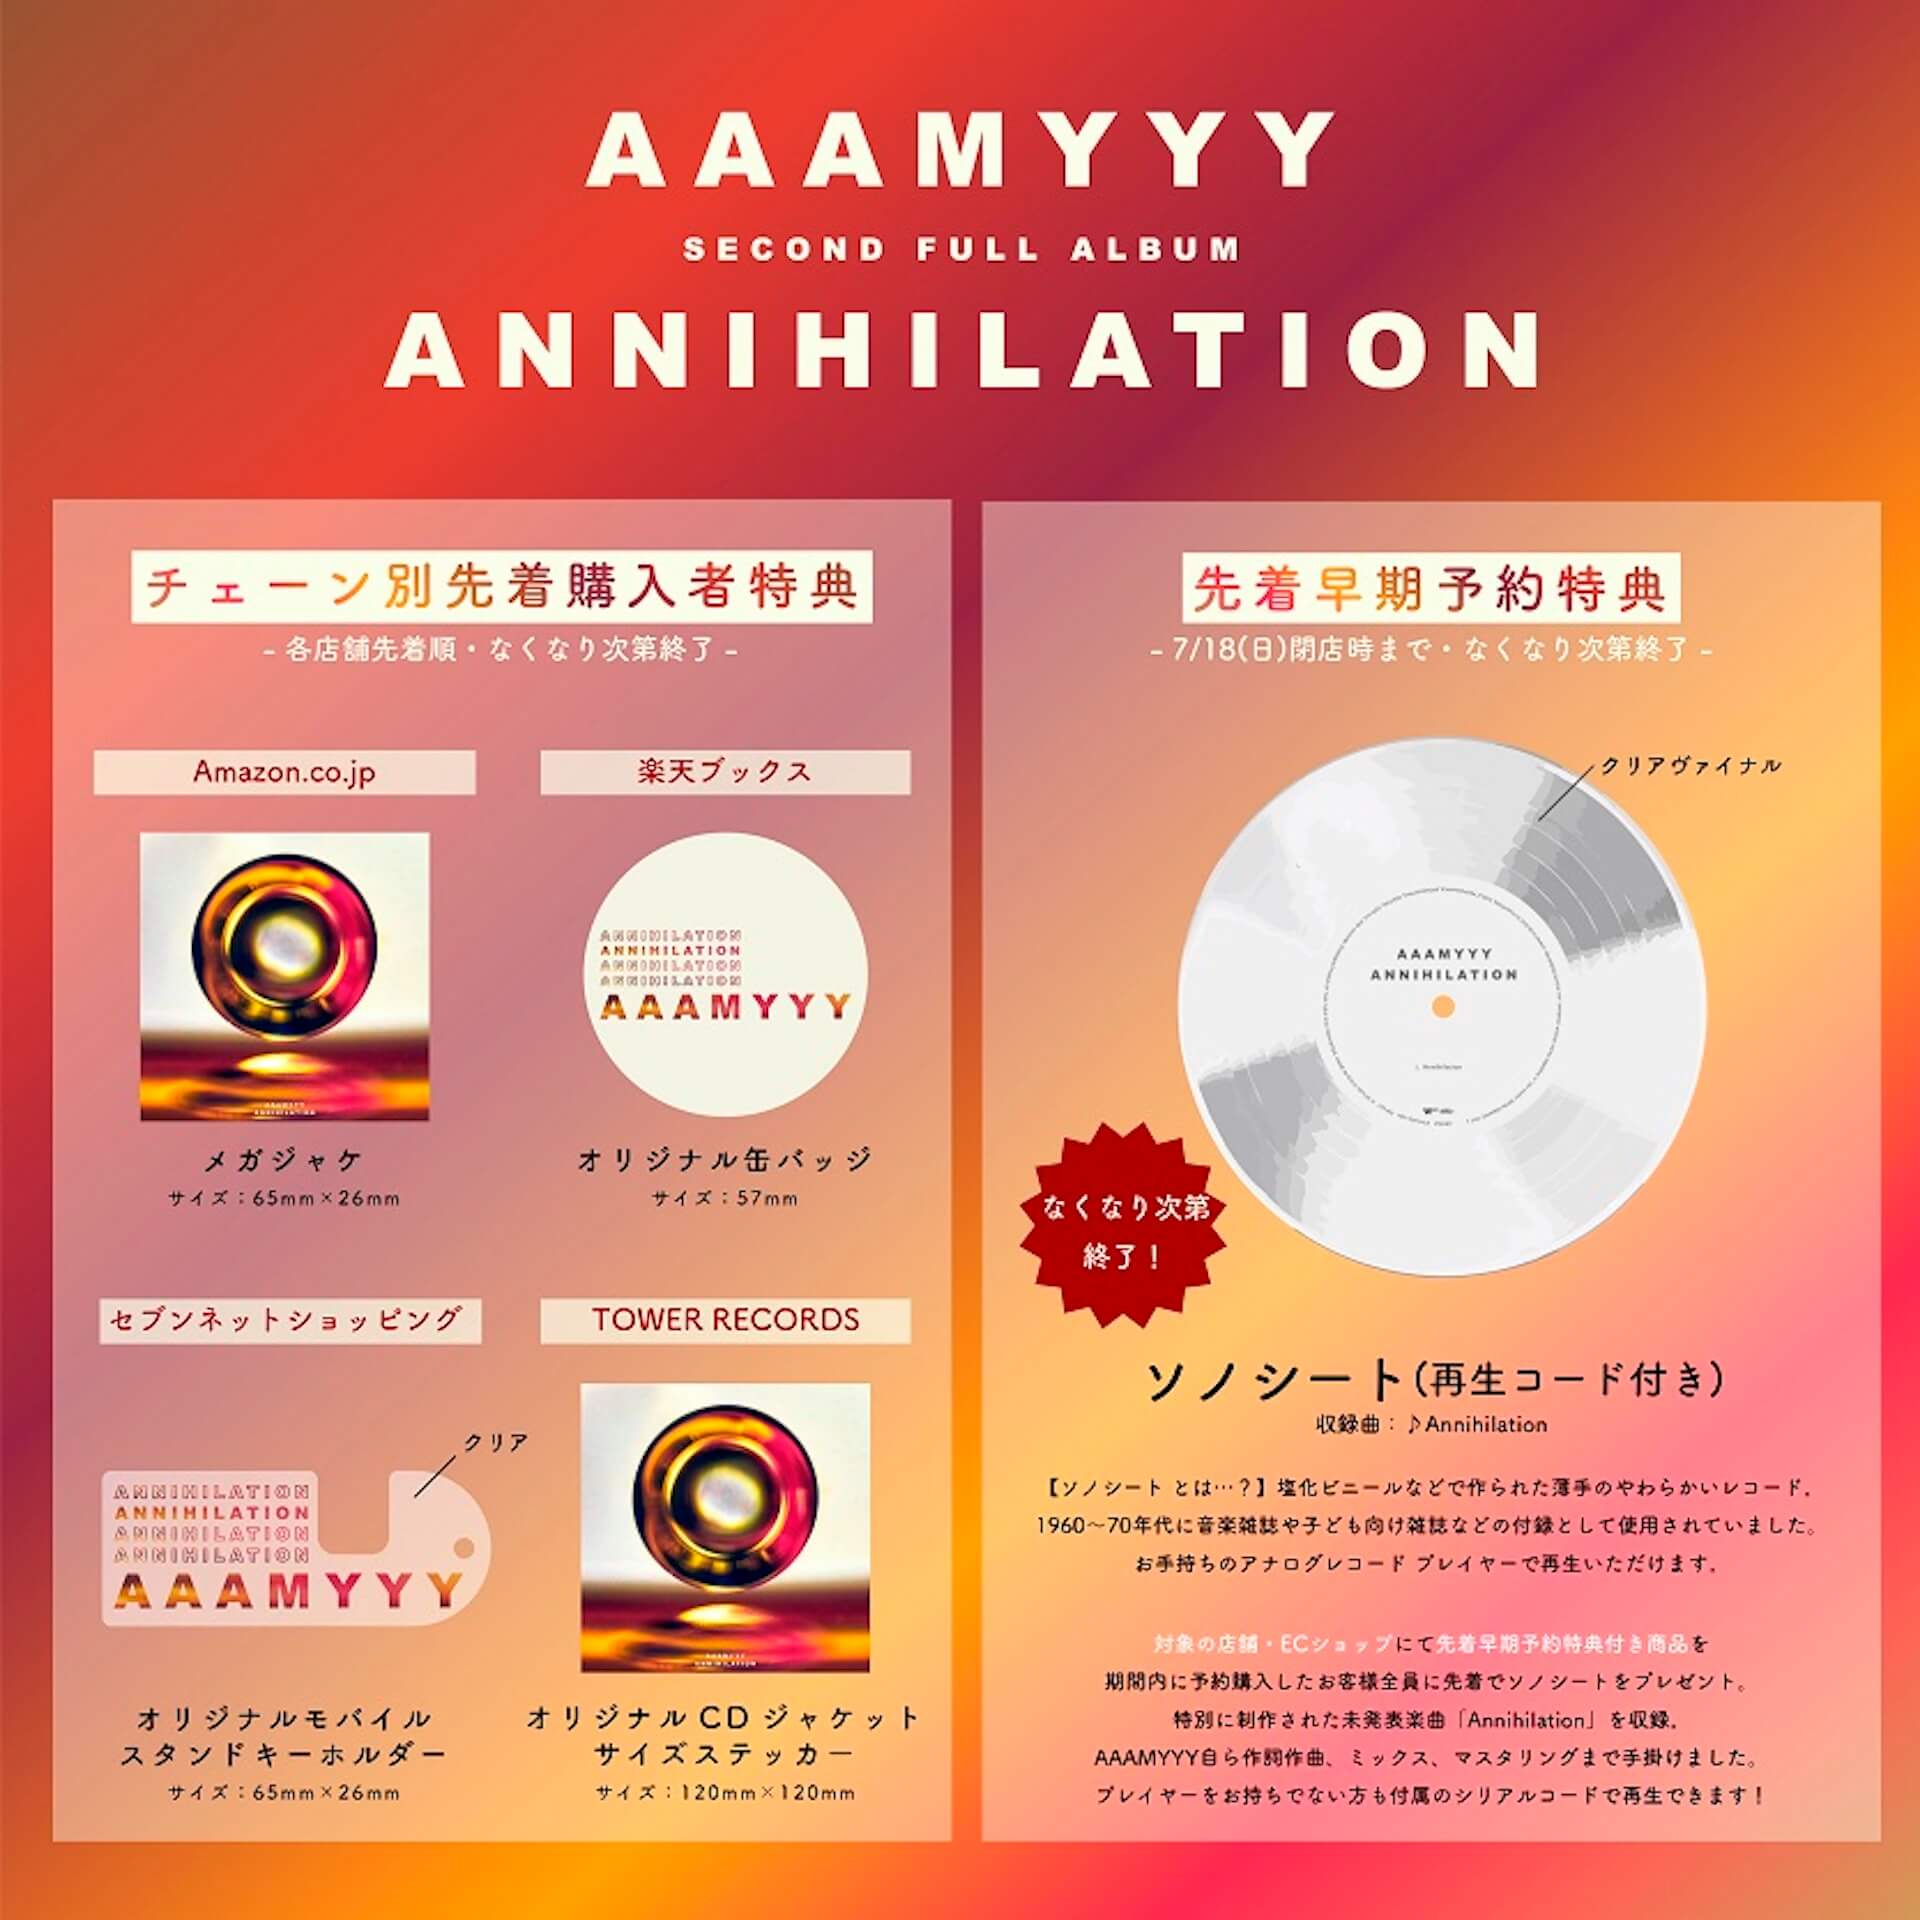 AAAMYYYが2ndフルアルバム『Annihilation』をリリース！収録曲“AFTERLIFE”先行配信、初の東名阪ツアーも開催決定 music10618_AAAMYYY_annihilation3